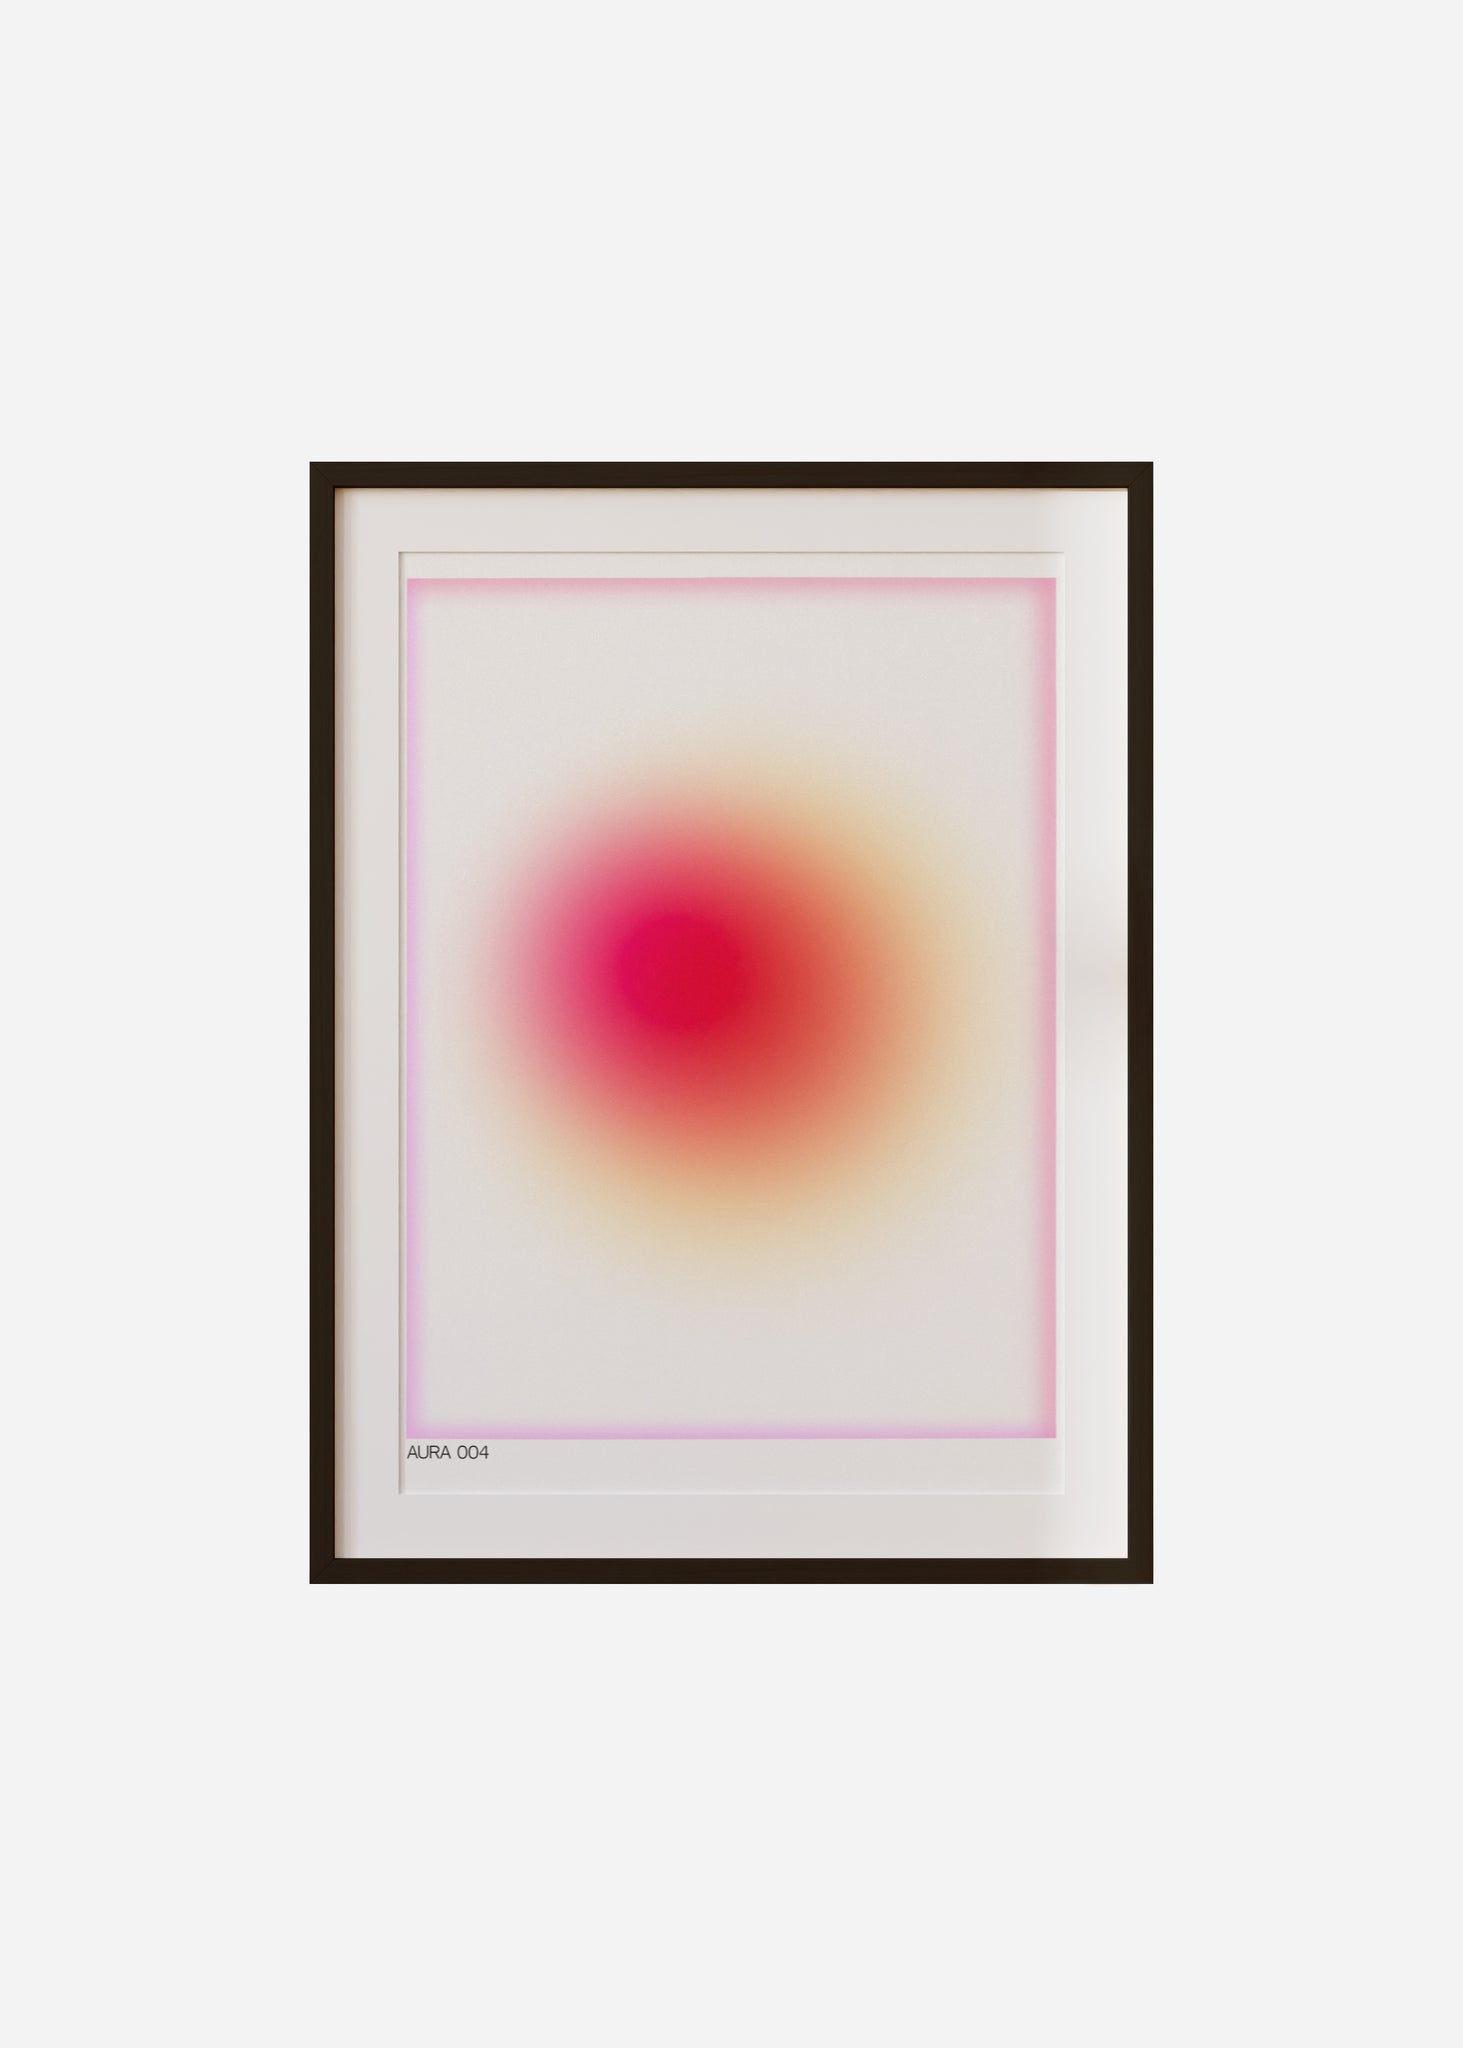 aura 004 Framed & Mounted Print